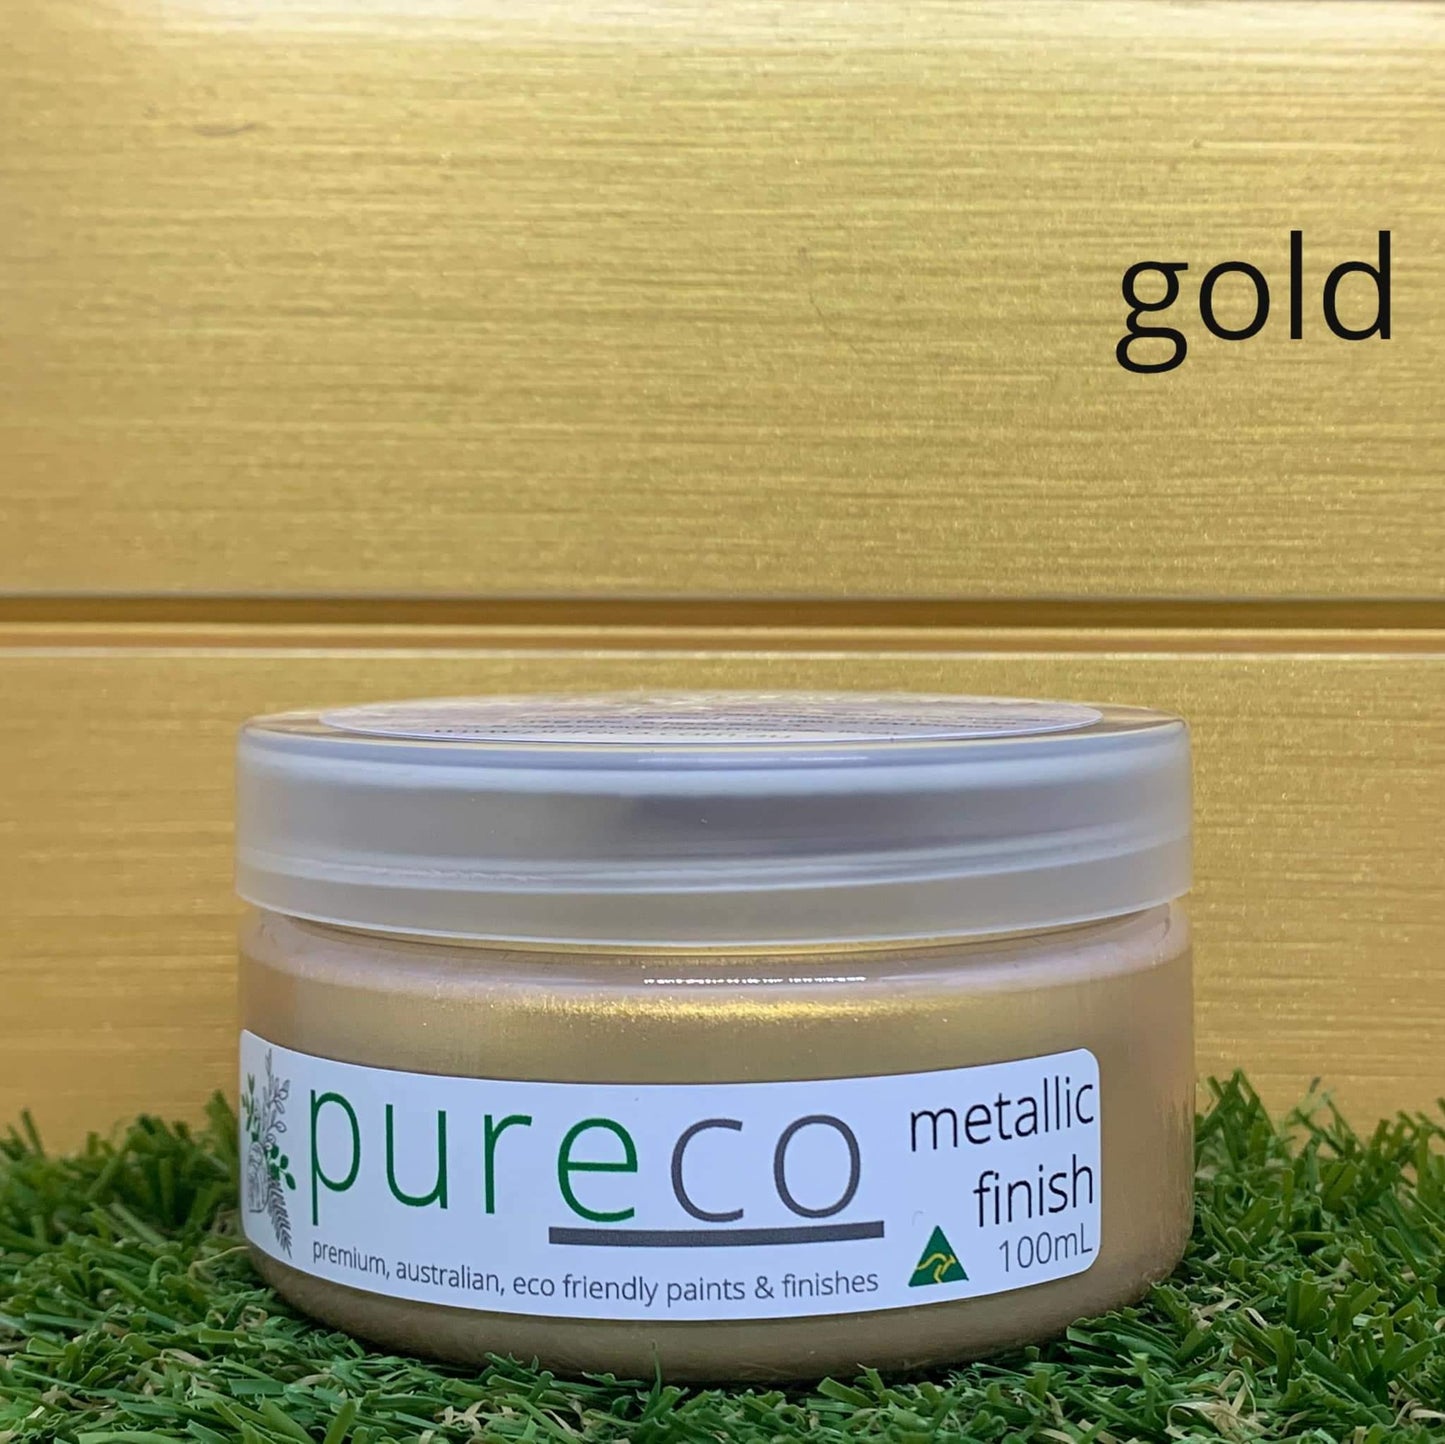 Pureco Metallic Finish Gold